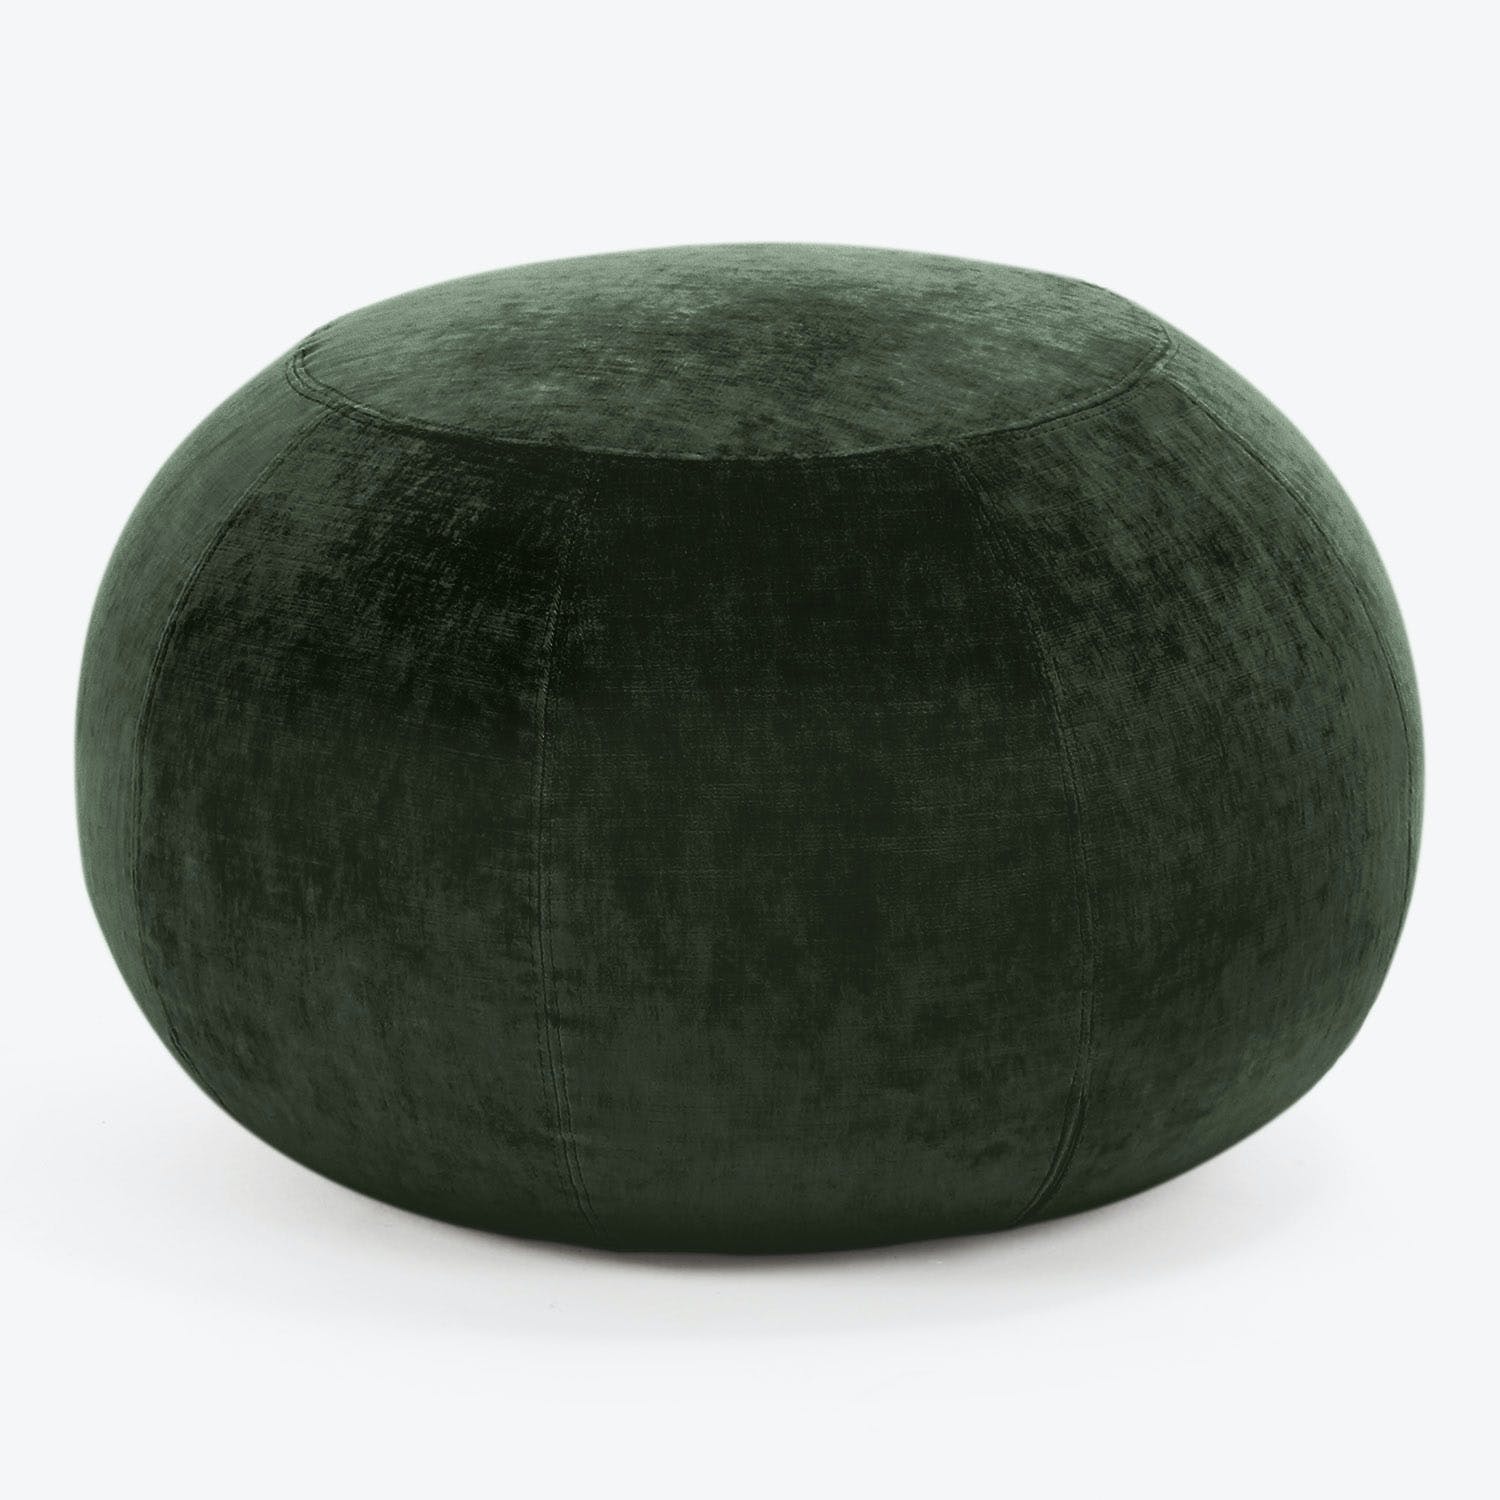 Dark green velvet ottoman adds a touch of elegance.